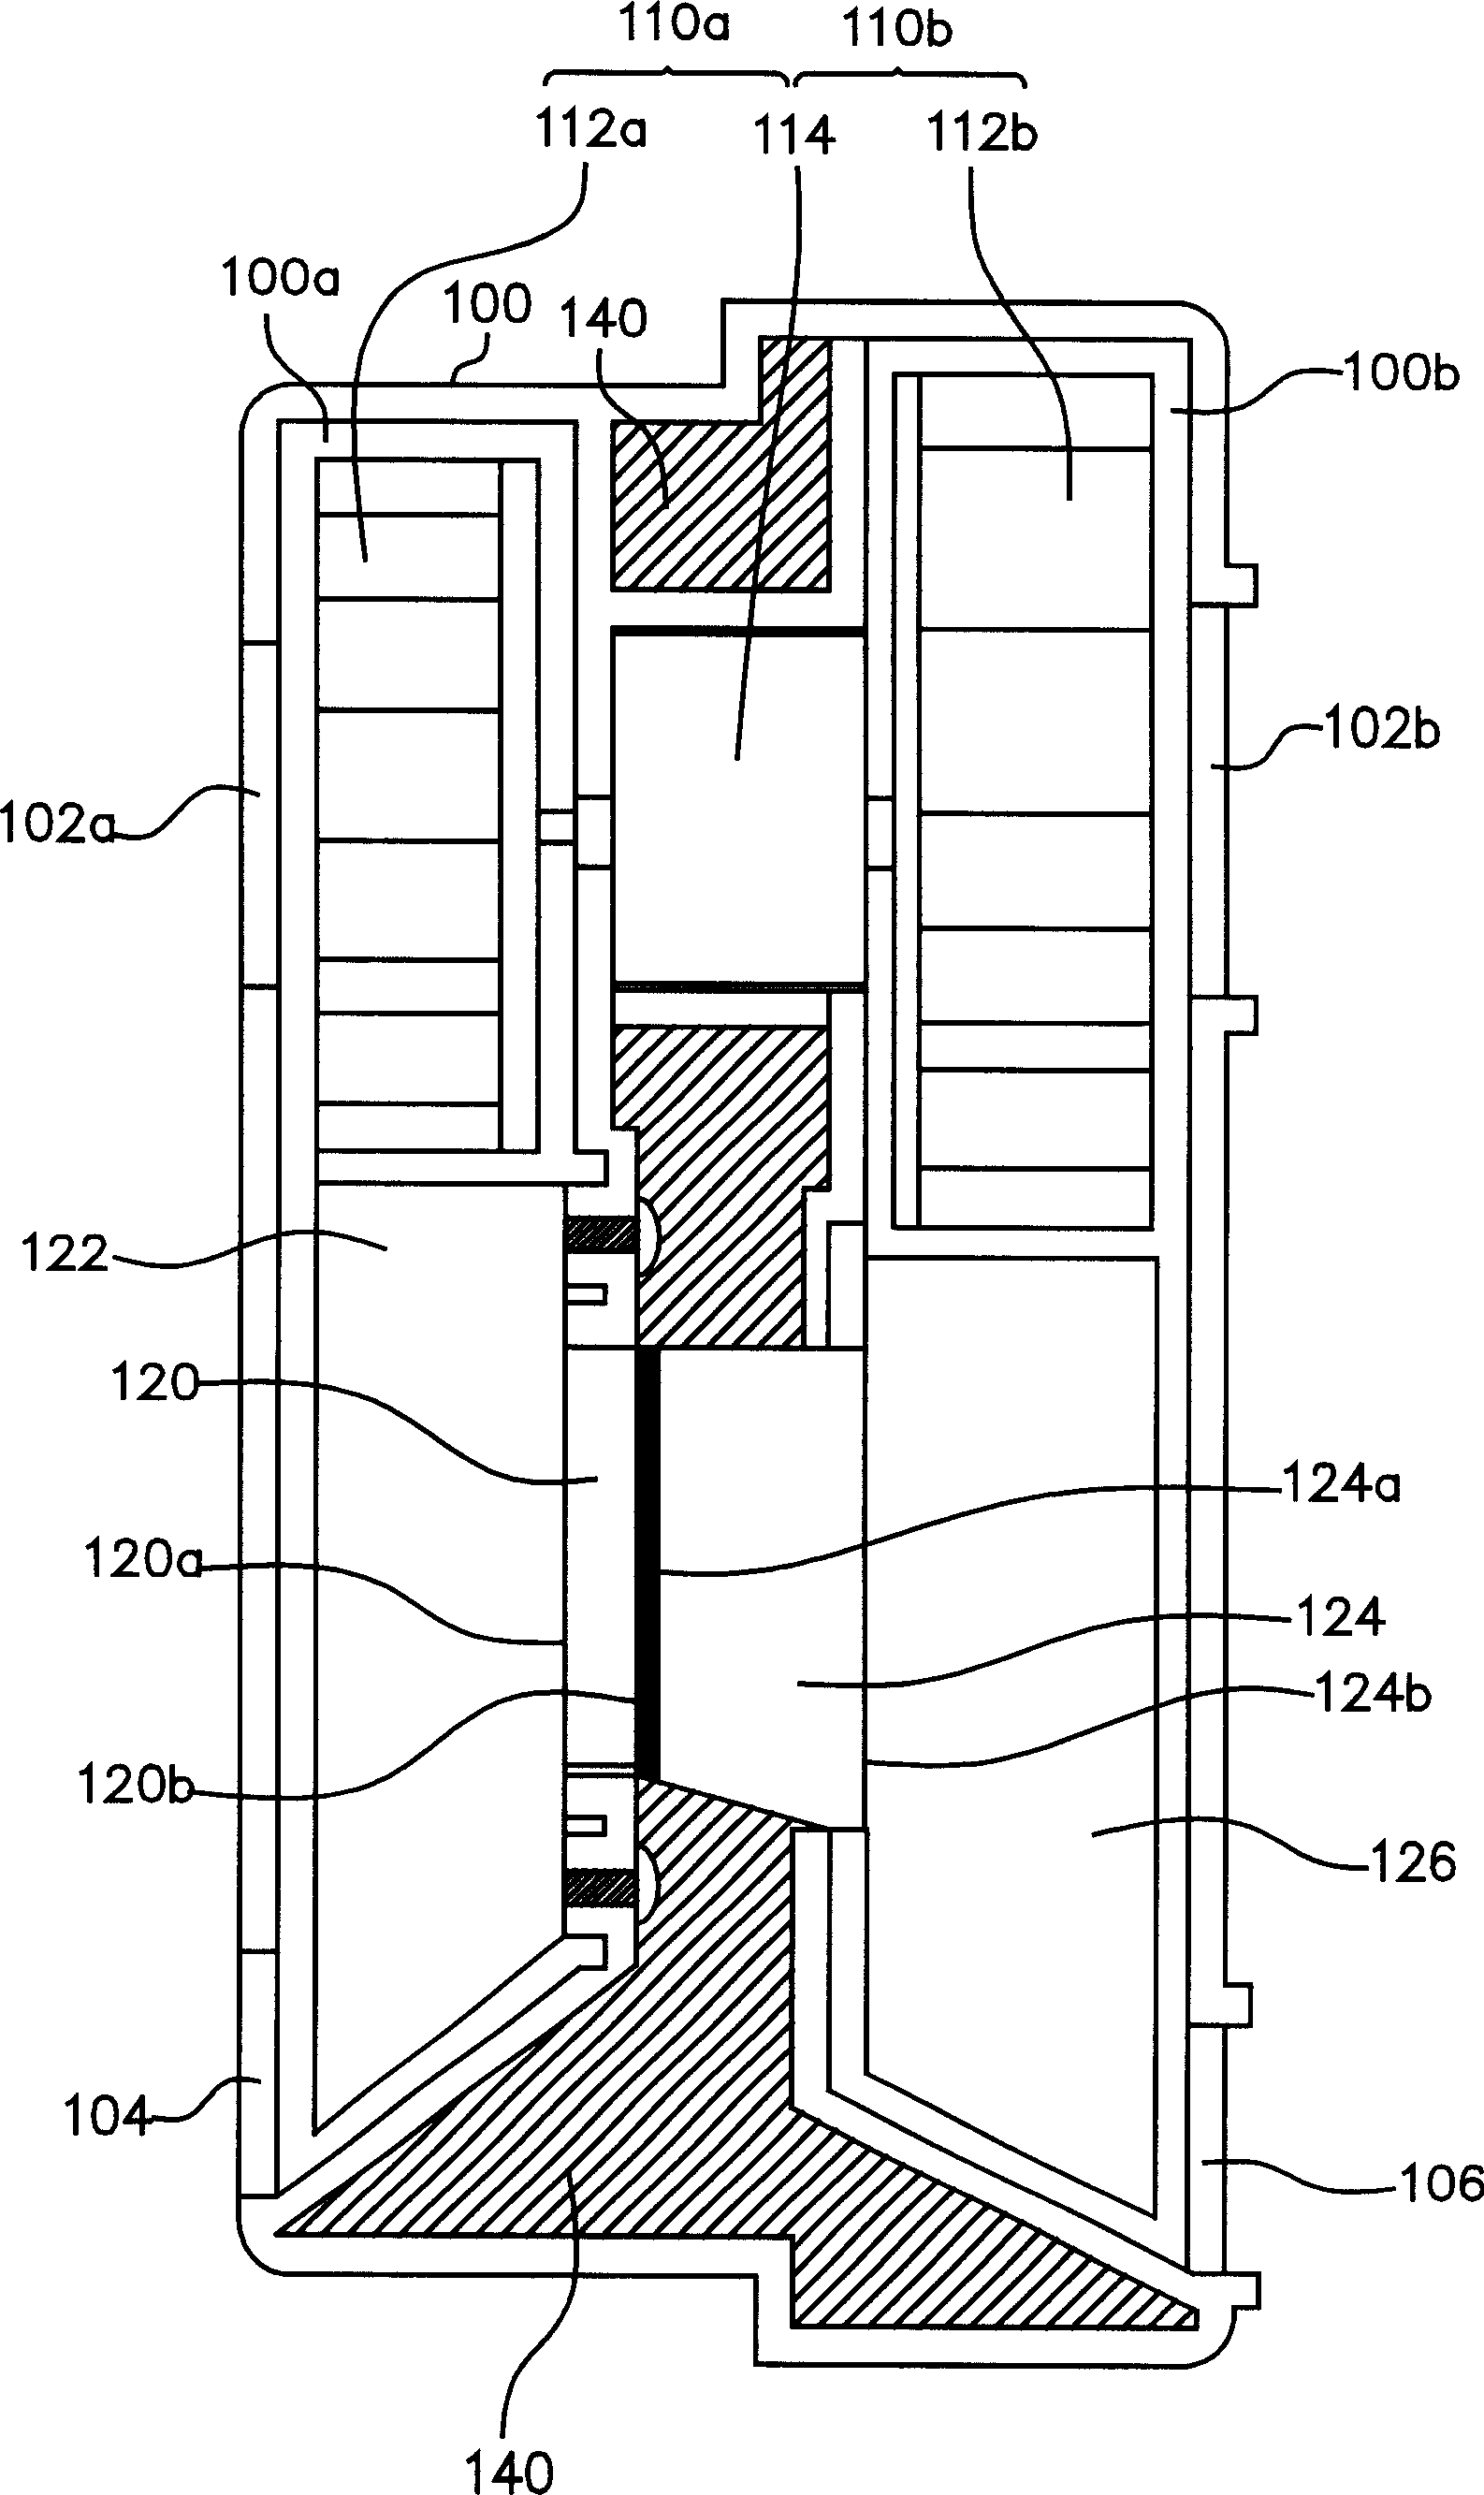 Heat radiator with heat exchange function